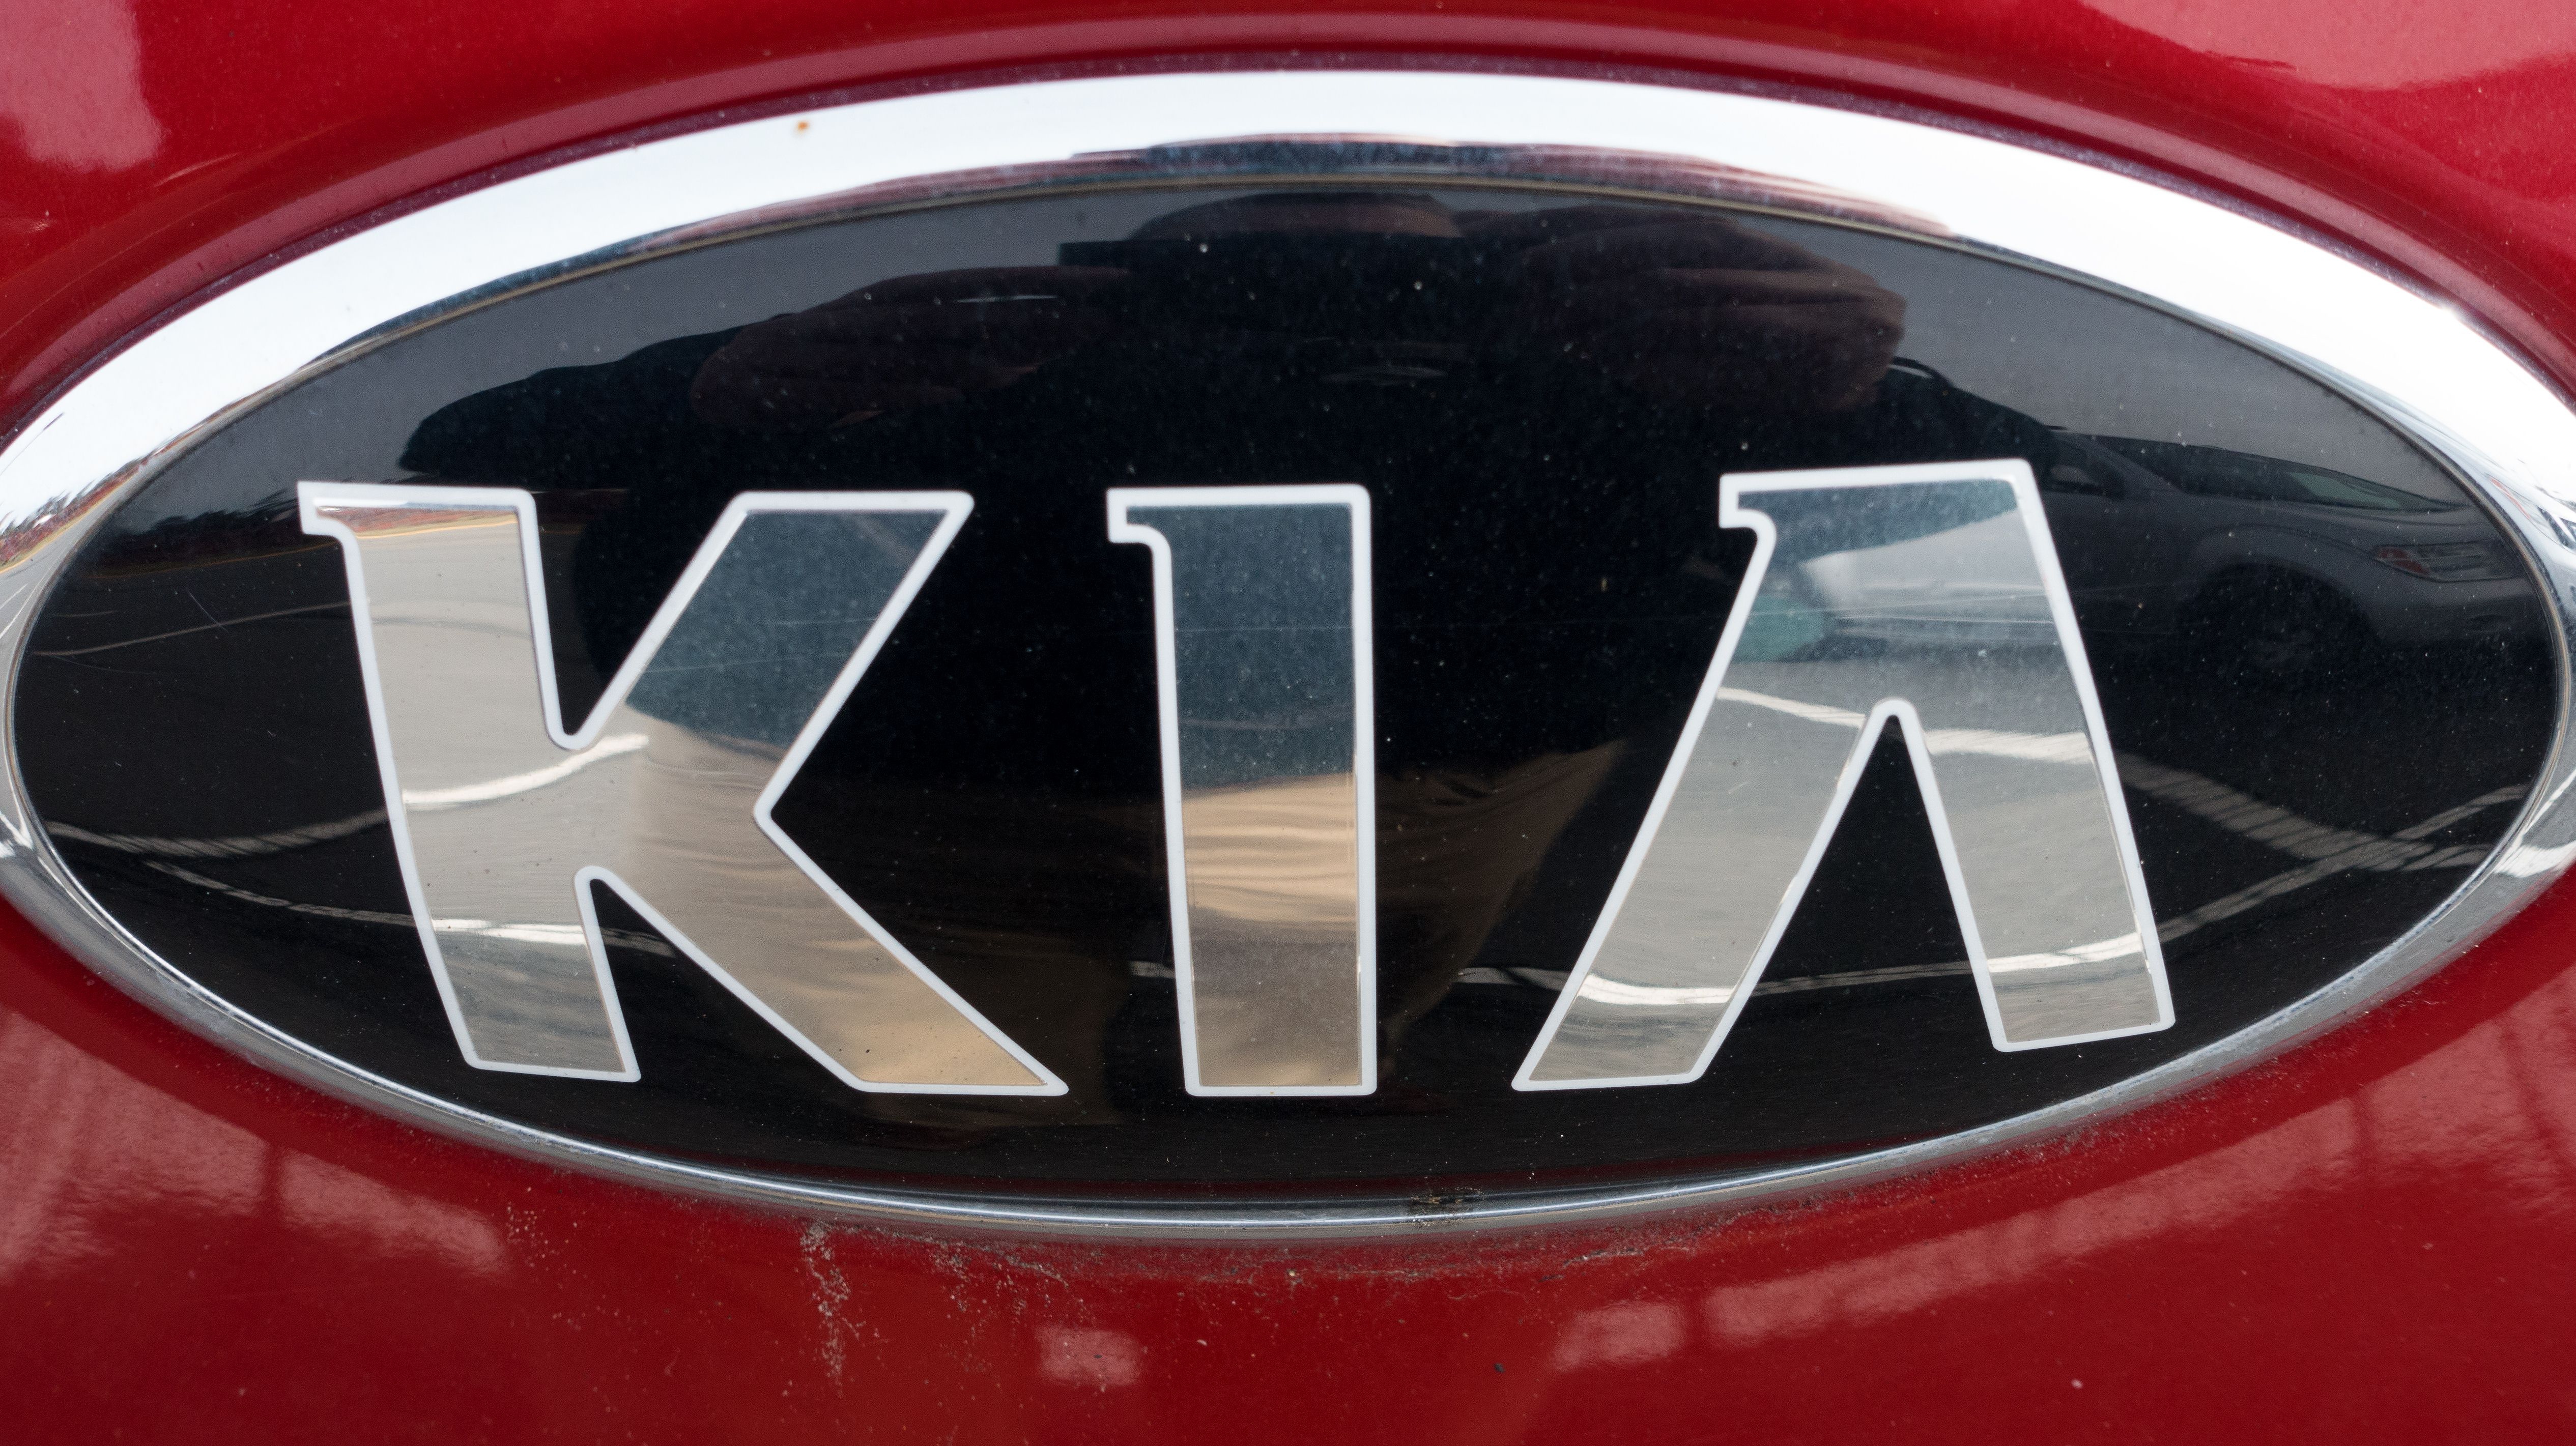 Hyundai, Kia recall vehicles due to increased fire risk | kare11.com